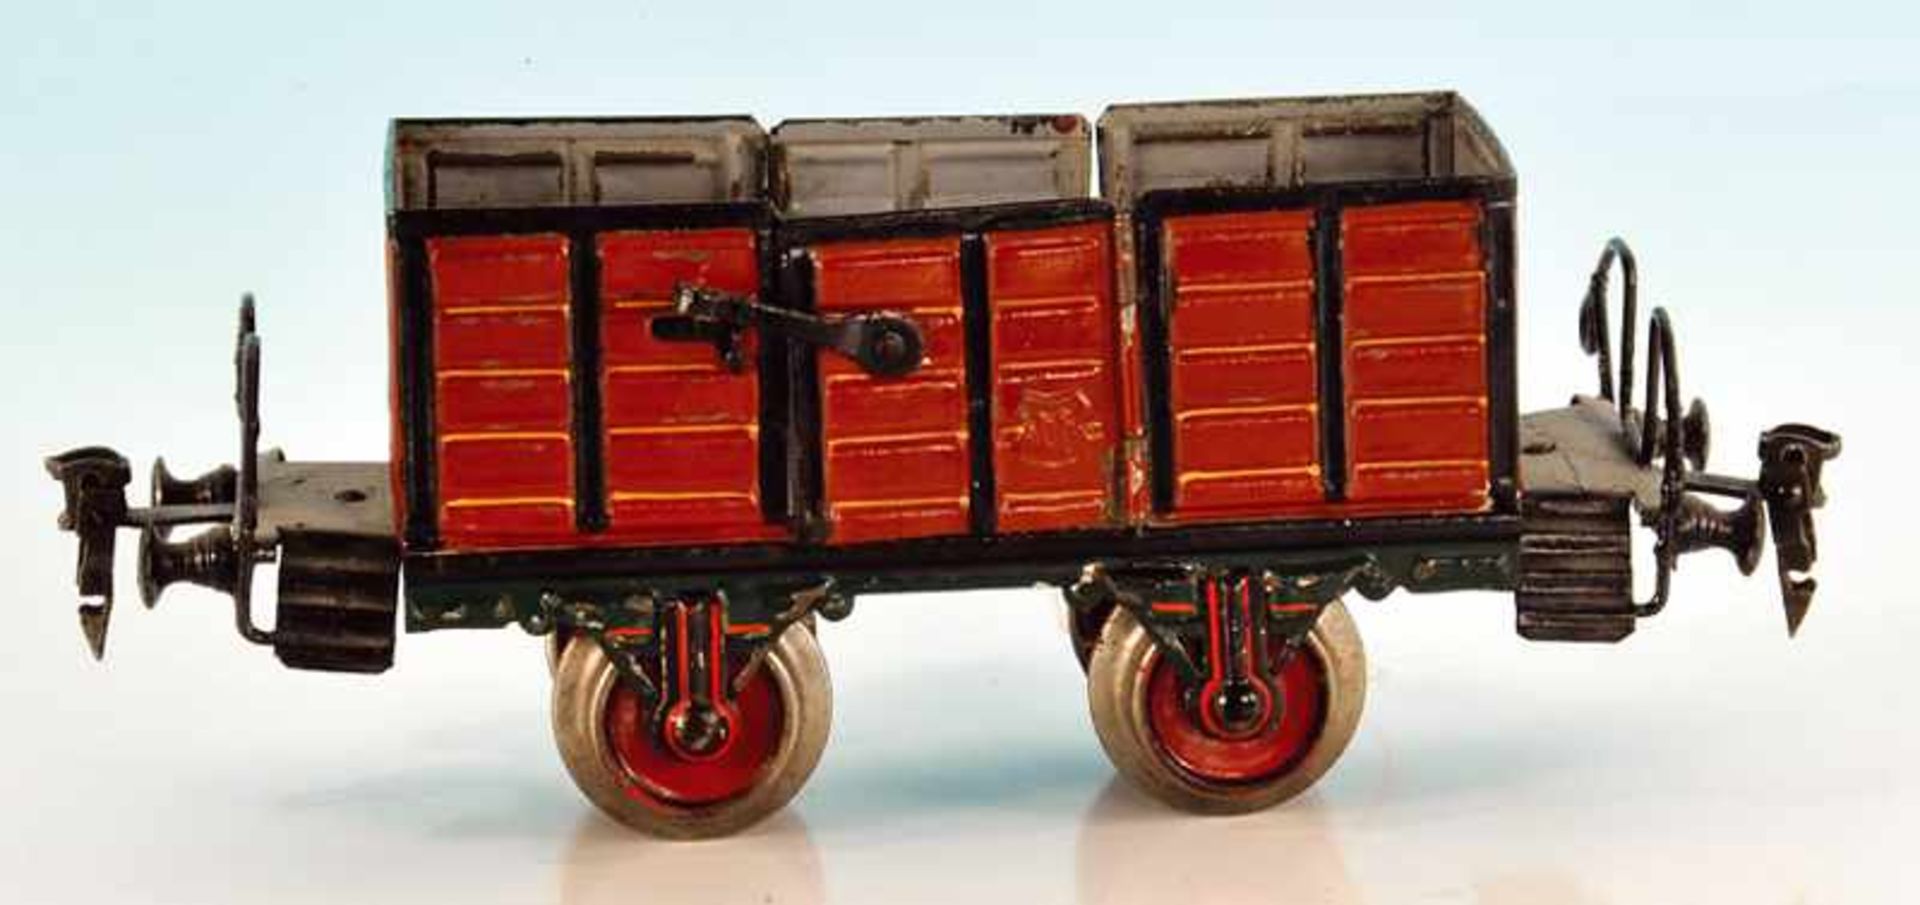 MÄRKLIN Hochbordwagen 1889/1 22 cm, braun handlackiert, rot ausgelegte Blechräder, guter Orig.-